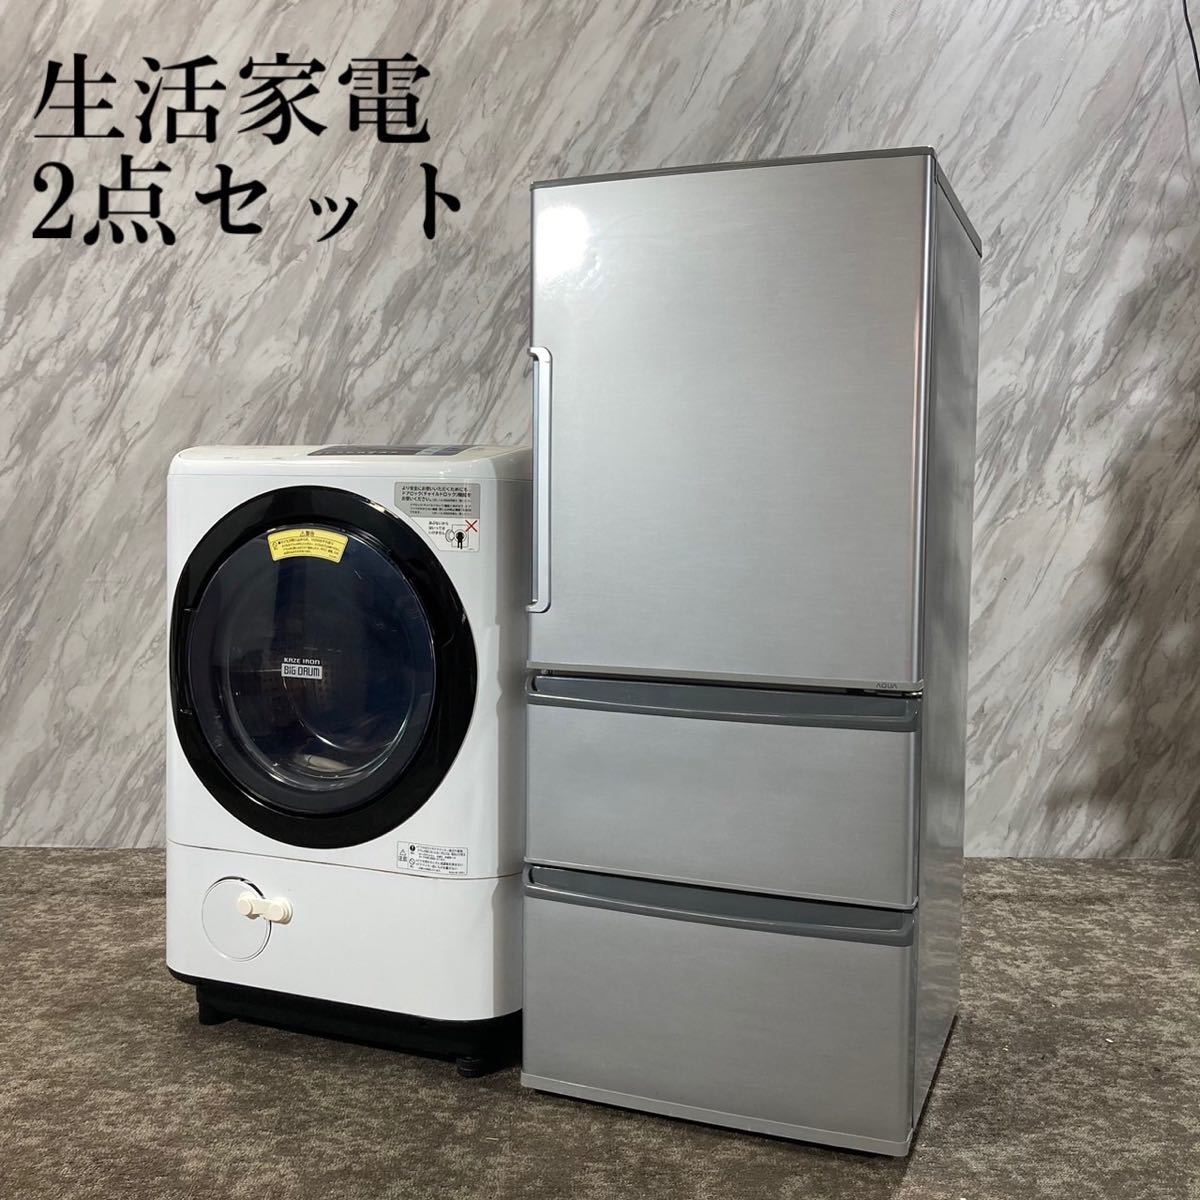 生活家電 2点セット 冷蔵庫 272L 洗濯機 11kg 家電 K508